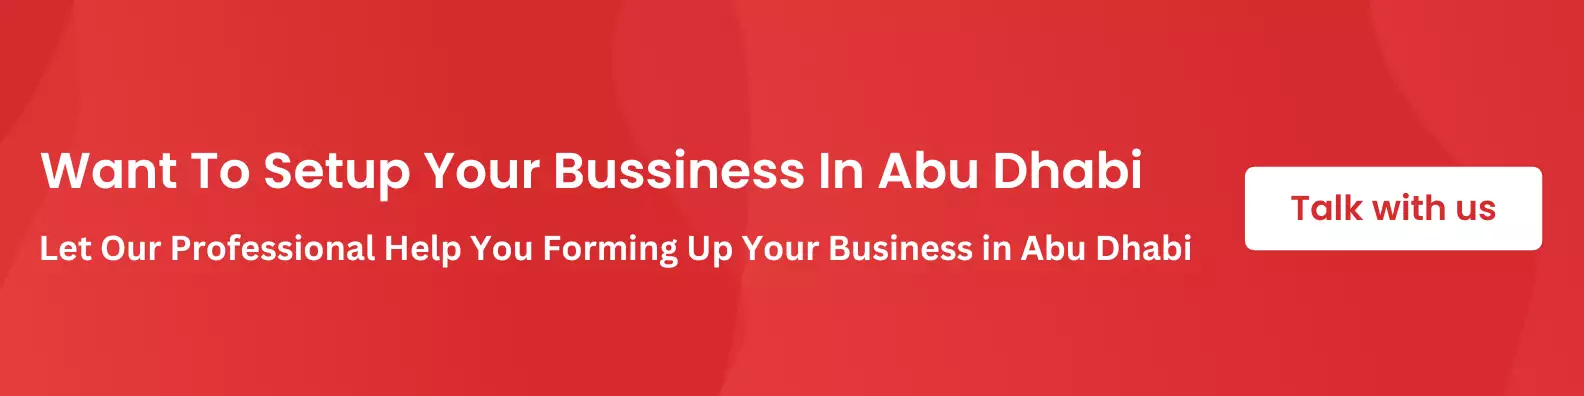 businesss-in-abu-dhabi-2